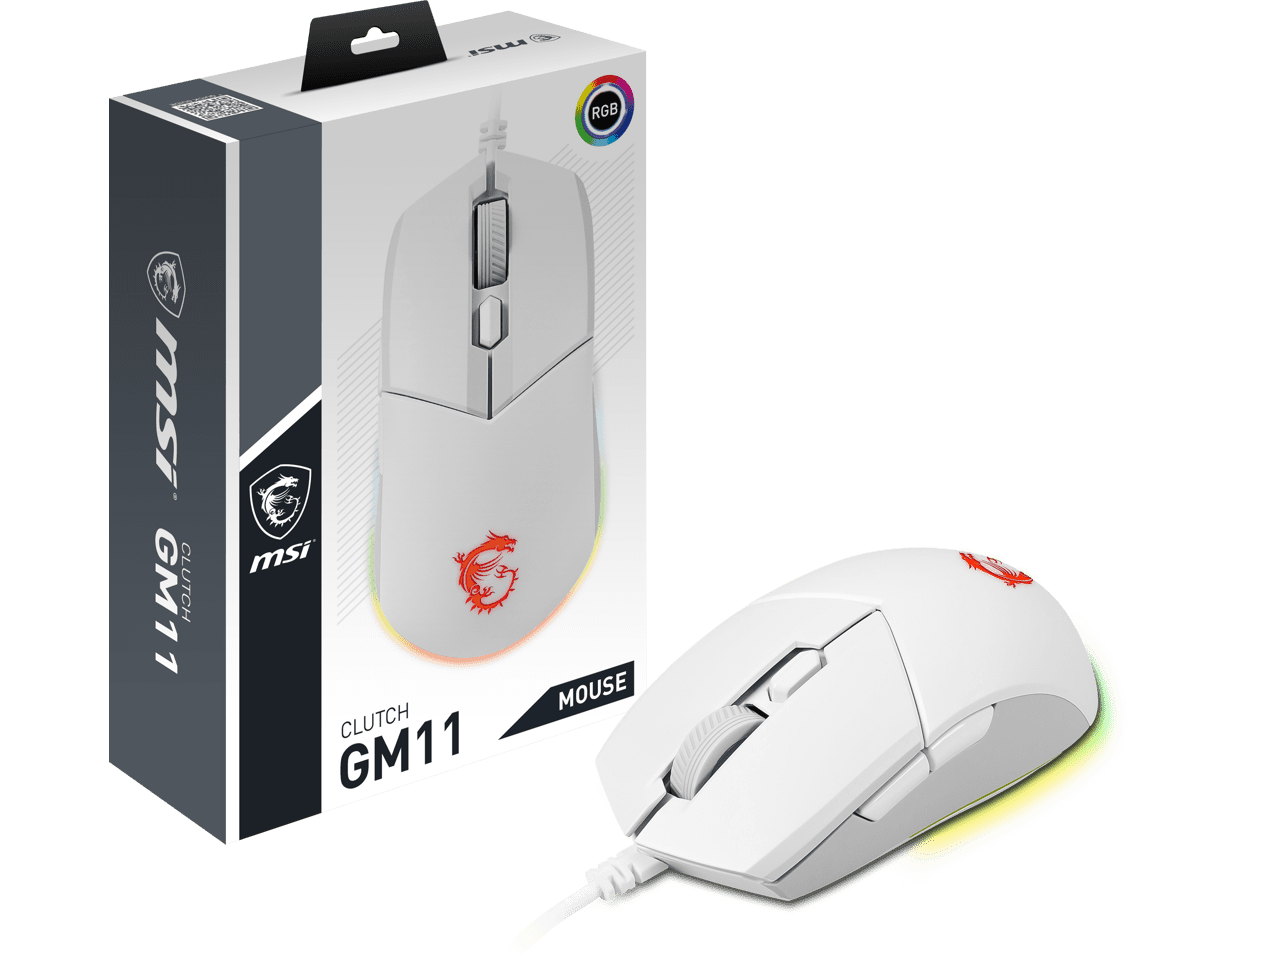 MSI Clutch GM11 White Gaming Mouse - 5000 DPI Optical Sensor